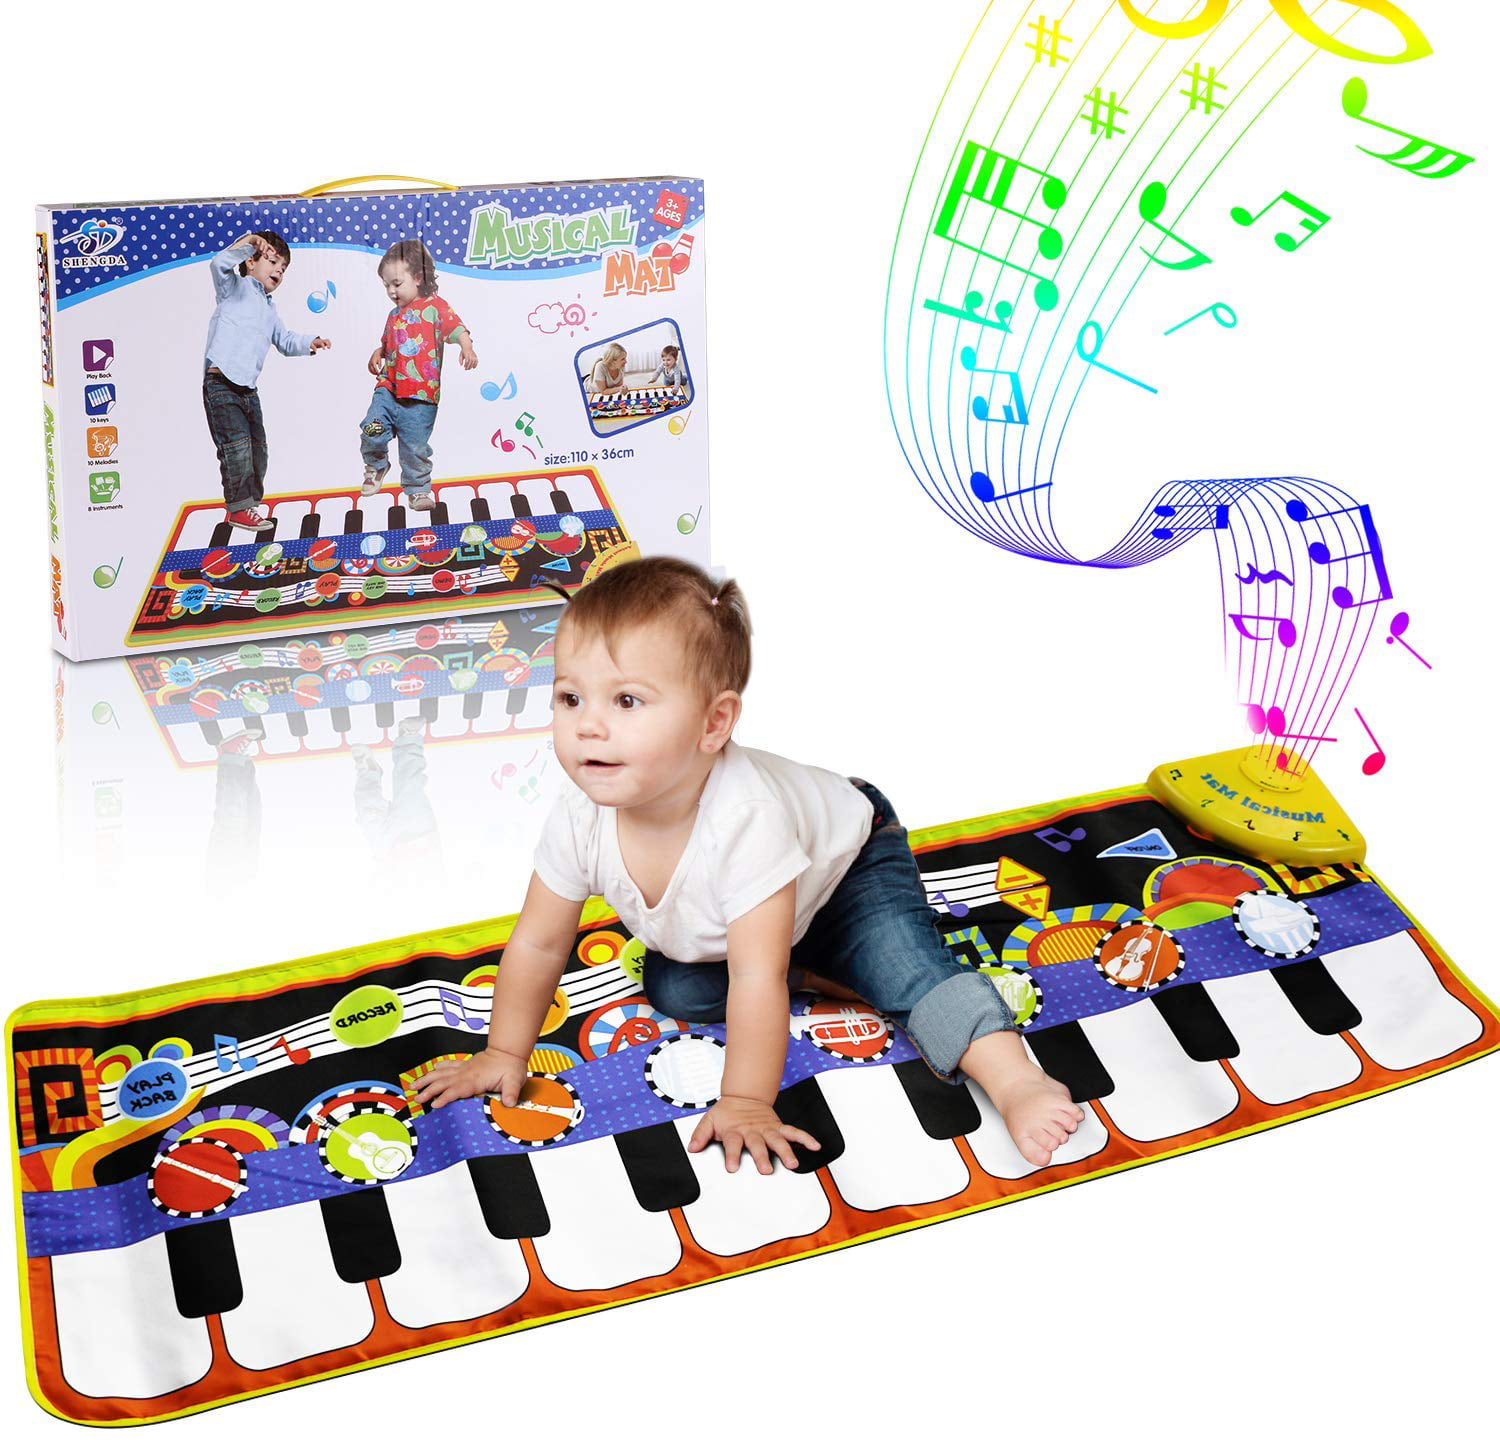 Piano Mat For Kids Xylophone Set Musical Keyboard Toddler Dance Floor Play Mats 